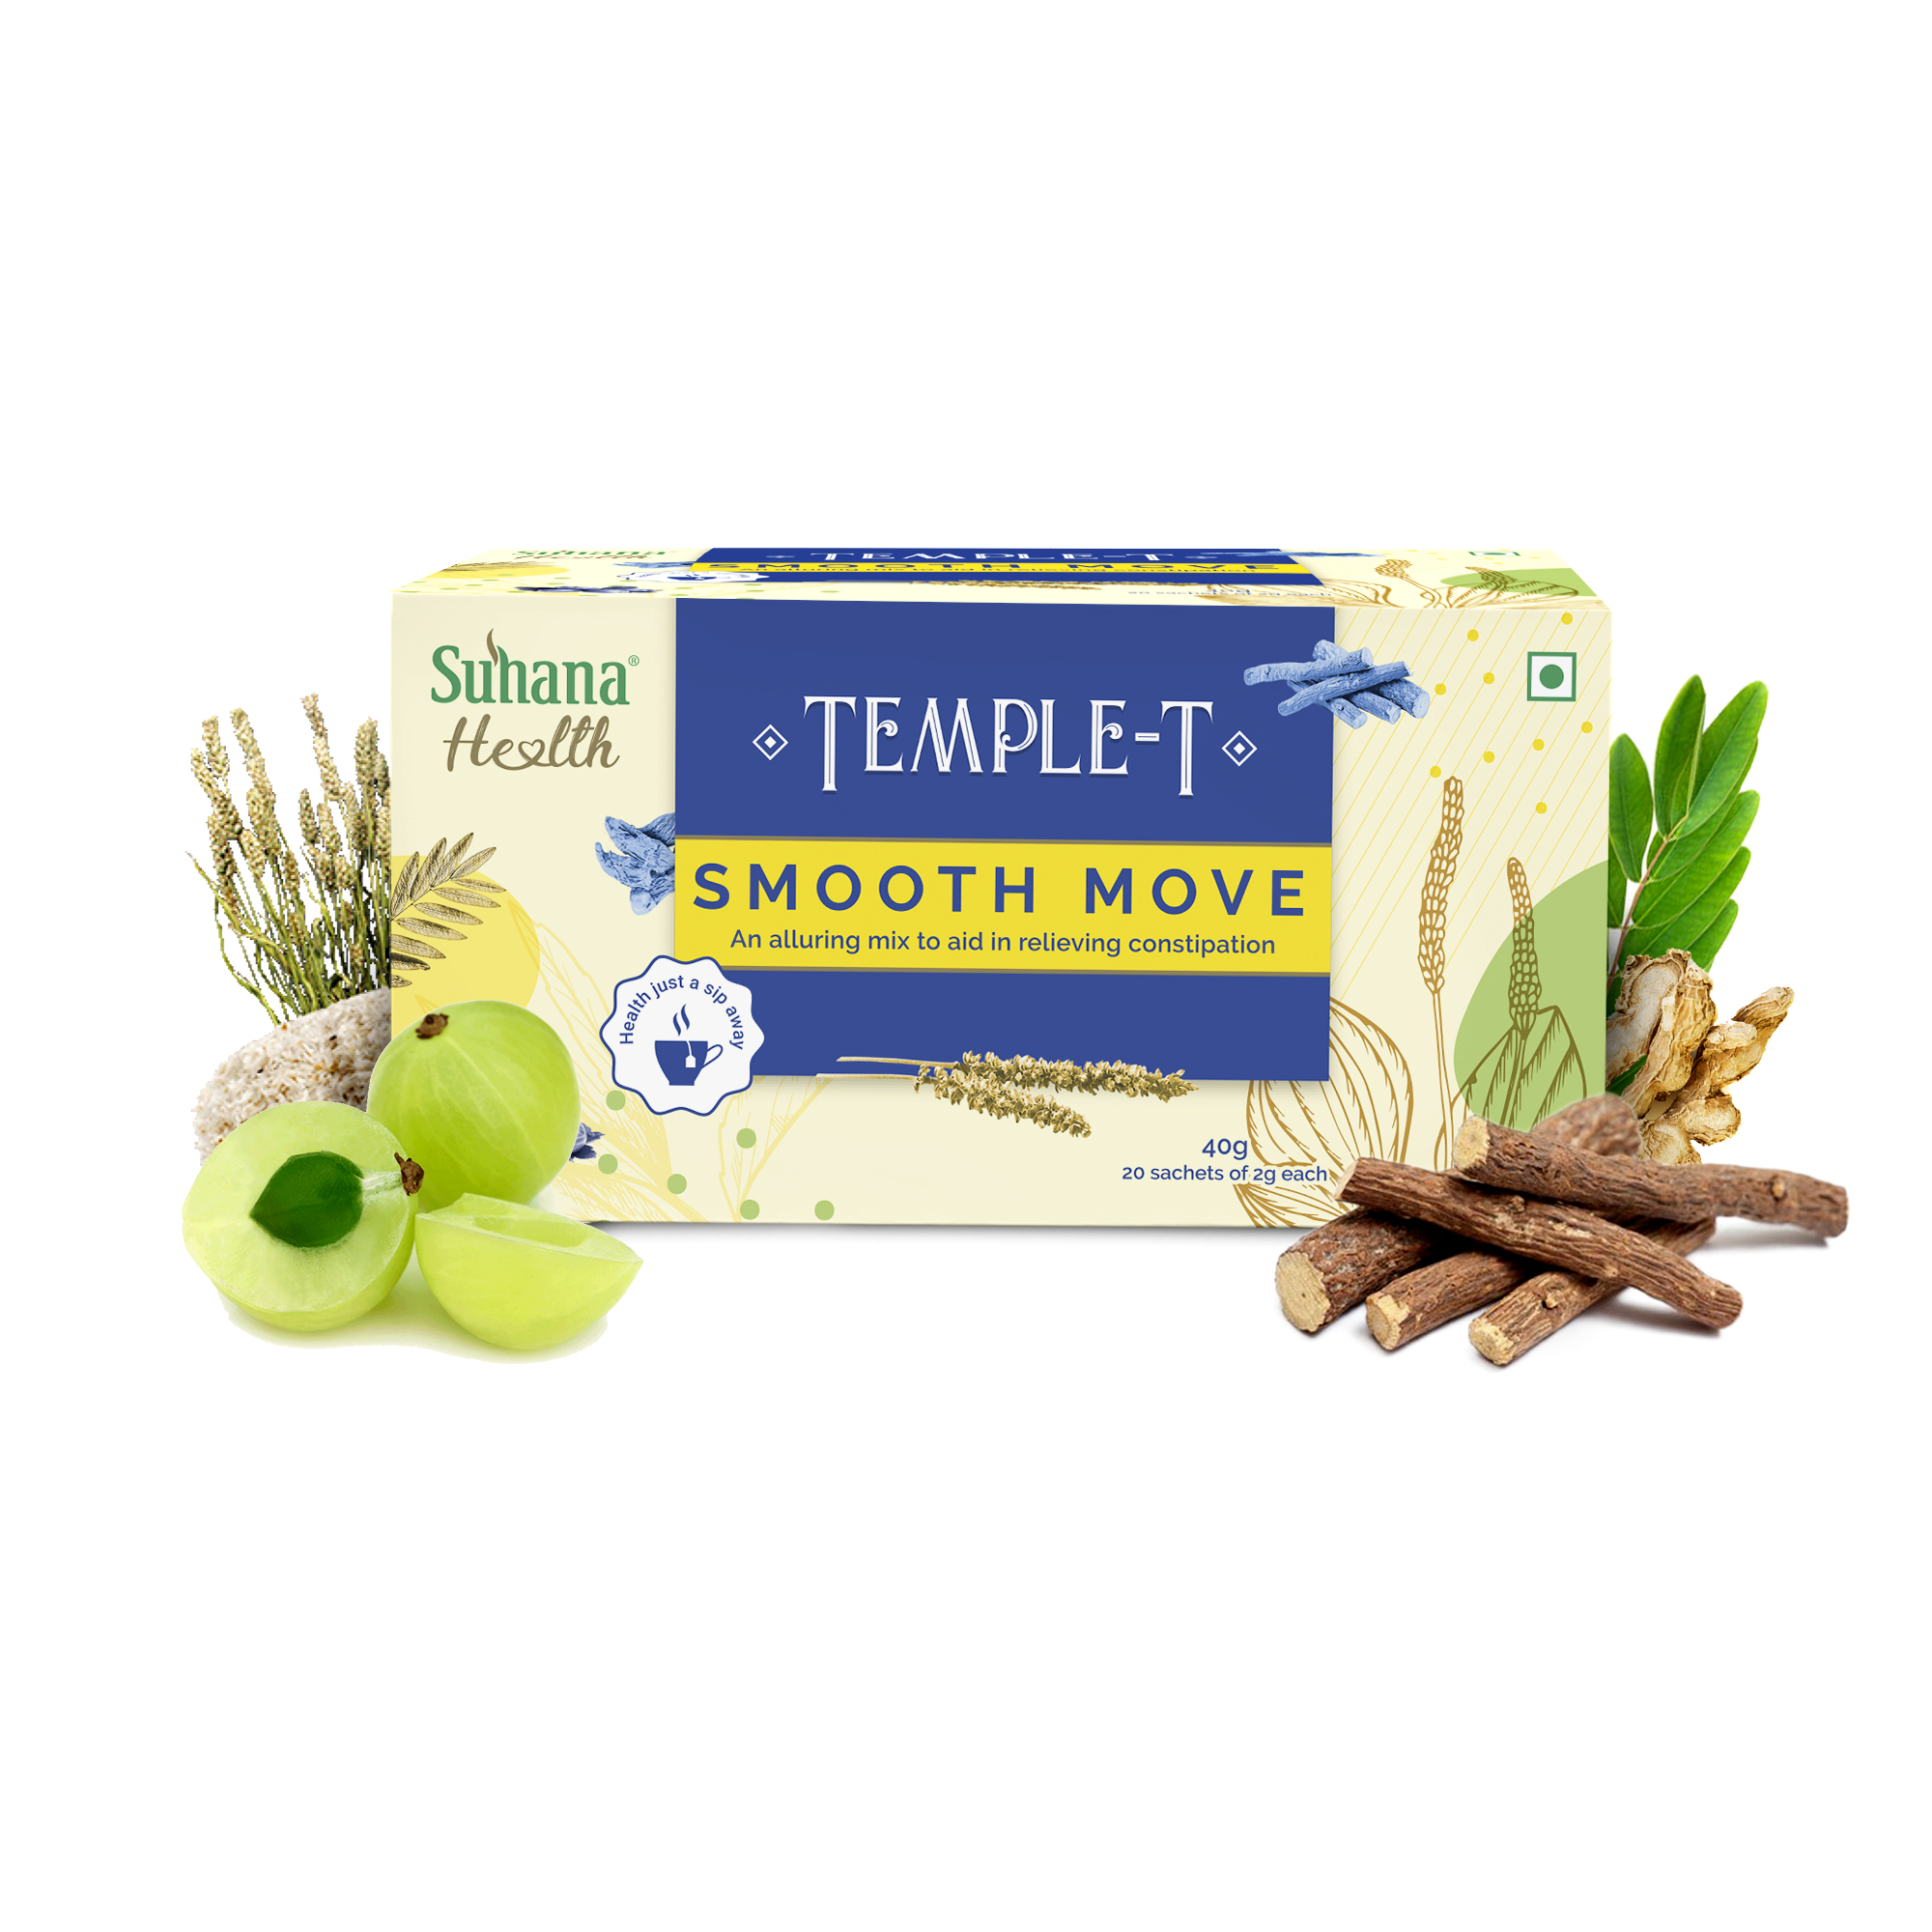 Suhana Health Smooth Move Herbal Premix Temple T